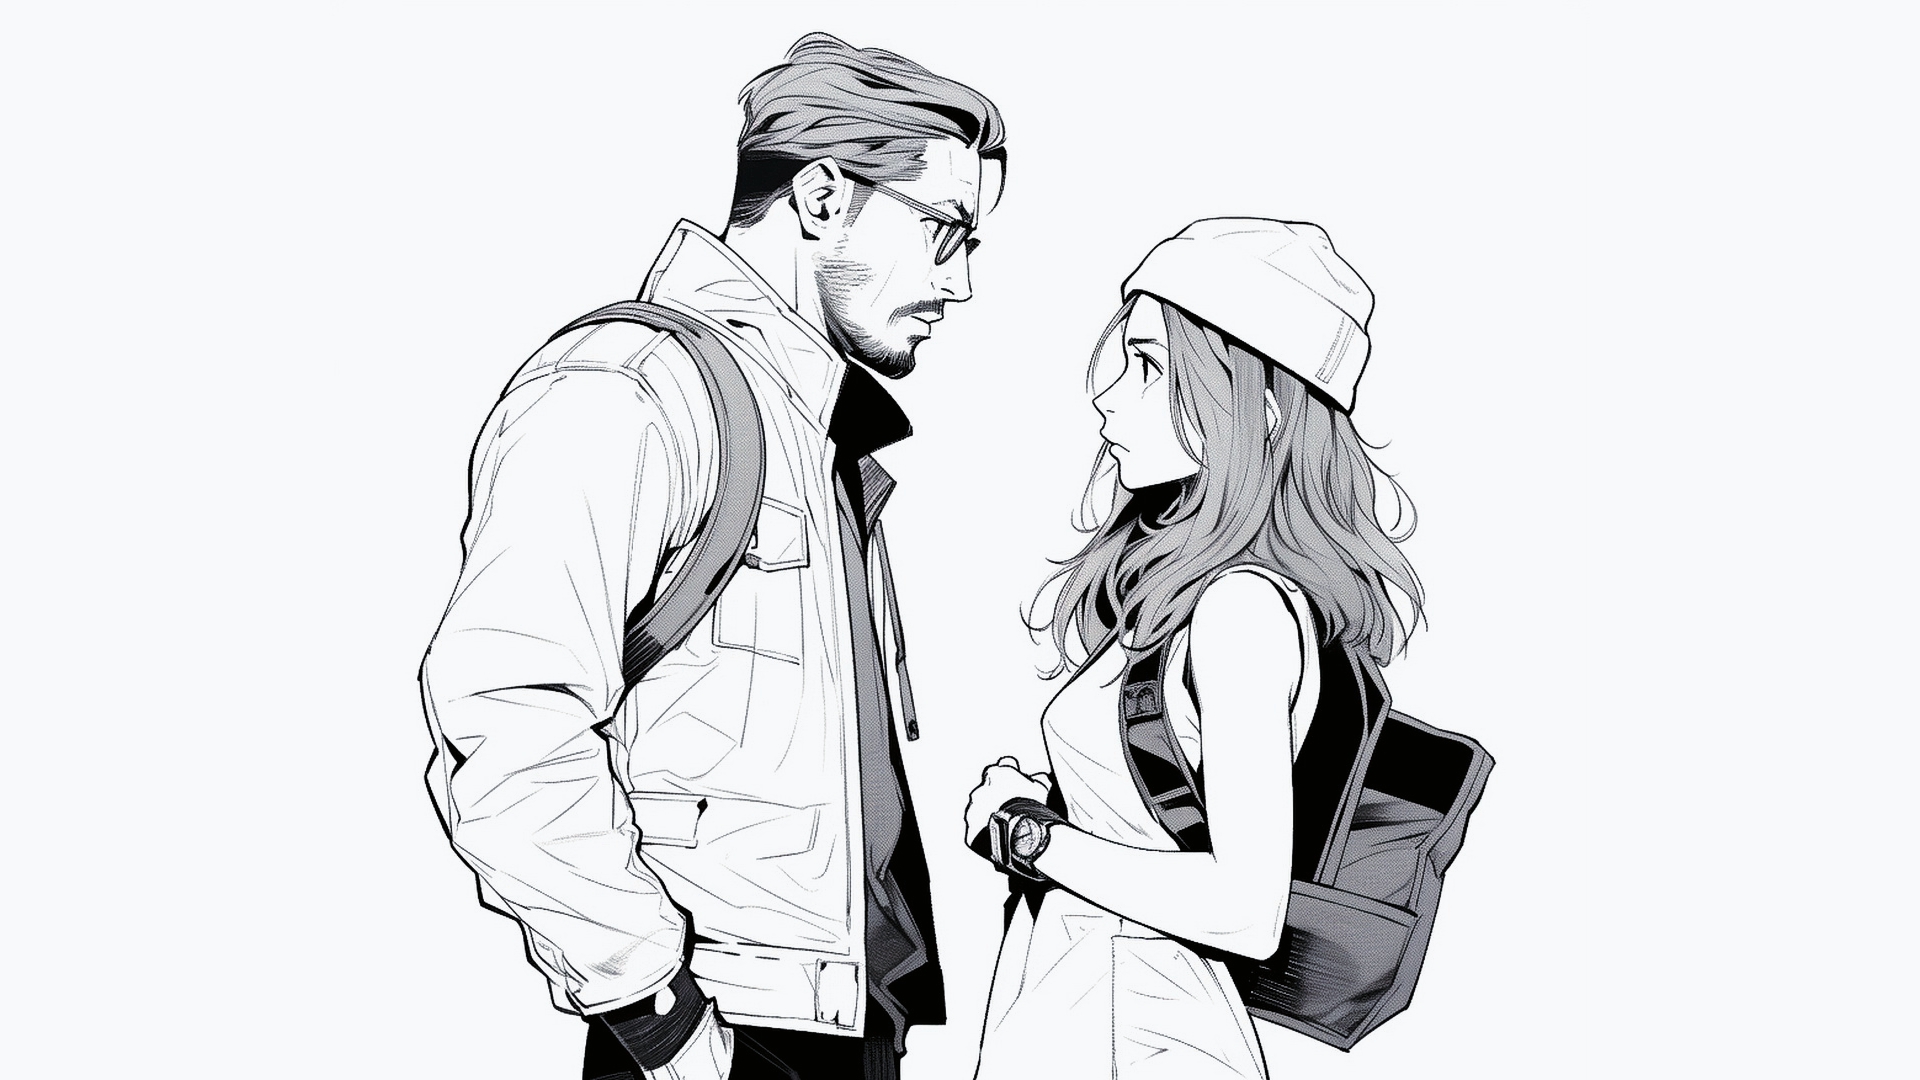 Бесплатное фото Рисунок мужчина и девушка на белом фоне